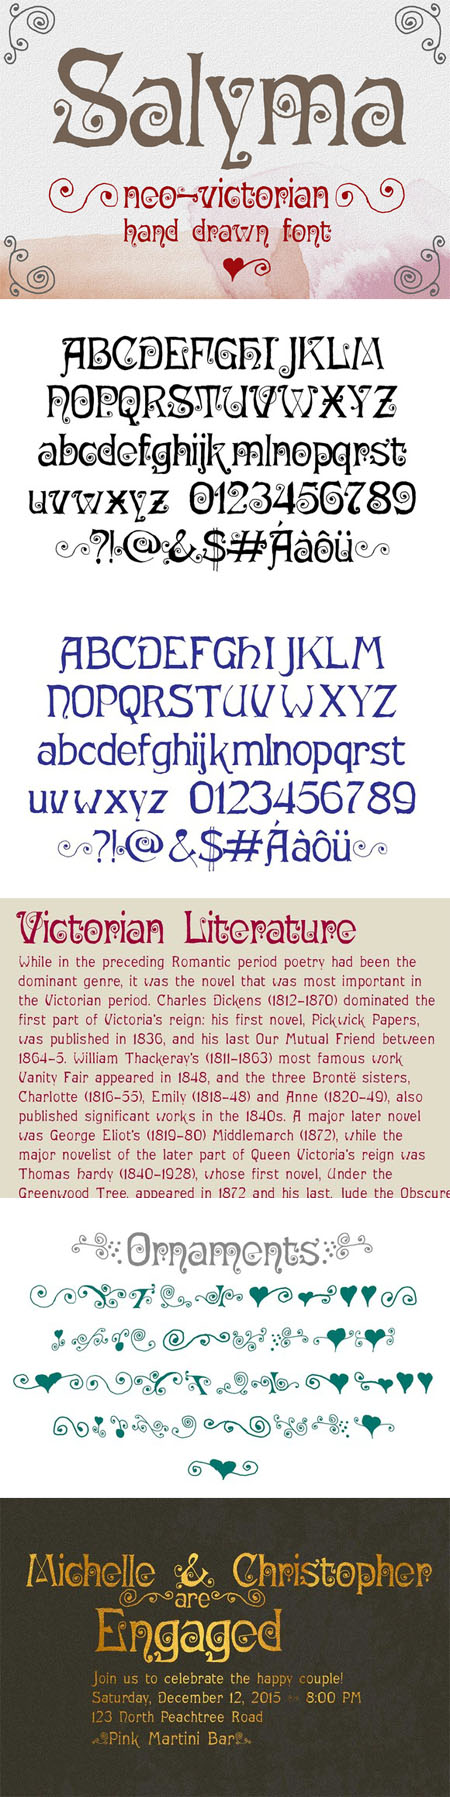 CM - Salyma neo-victorian hand drawn font 436447